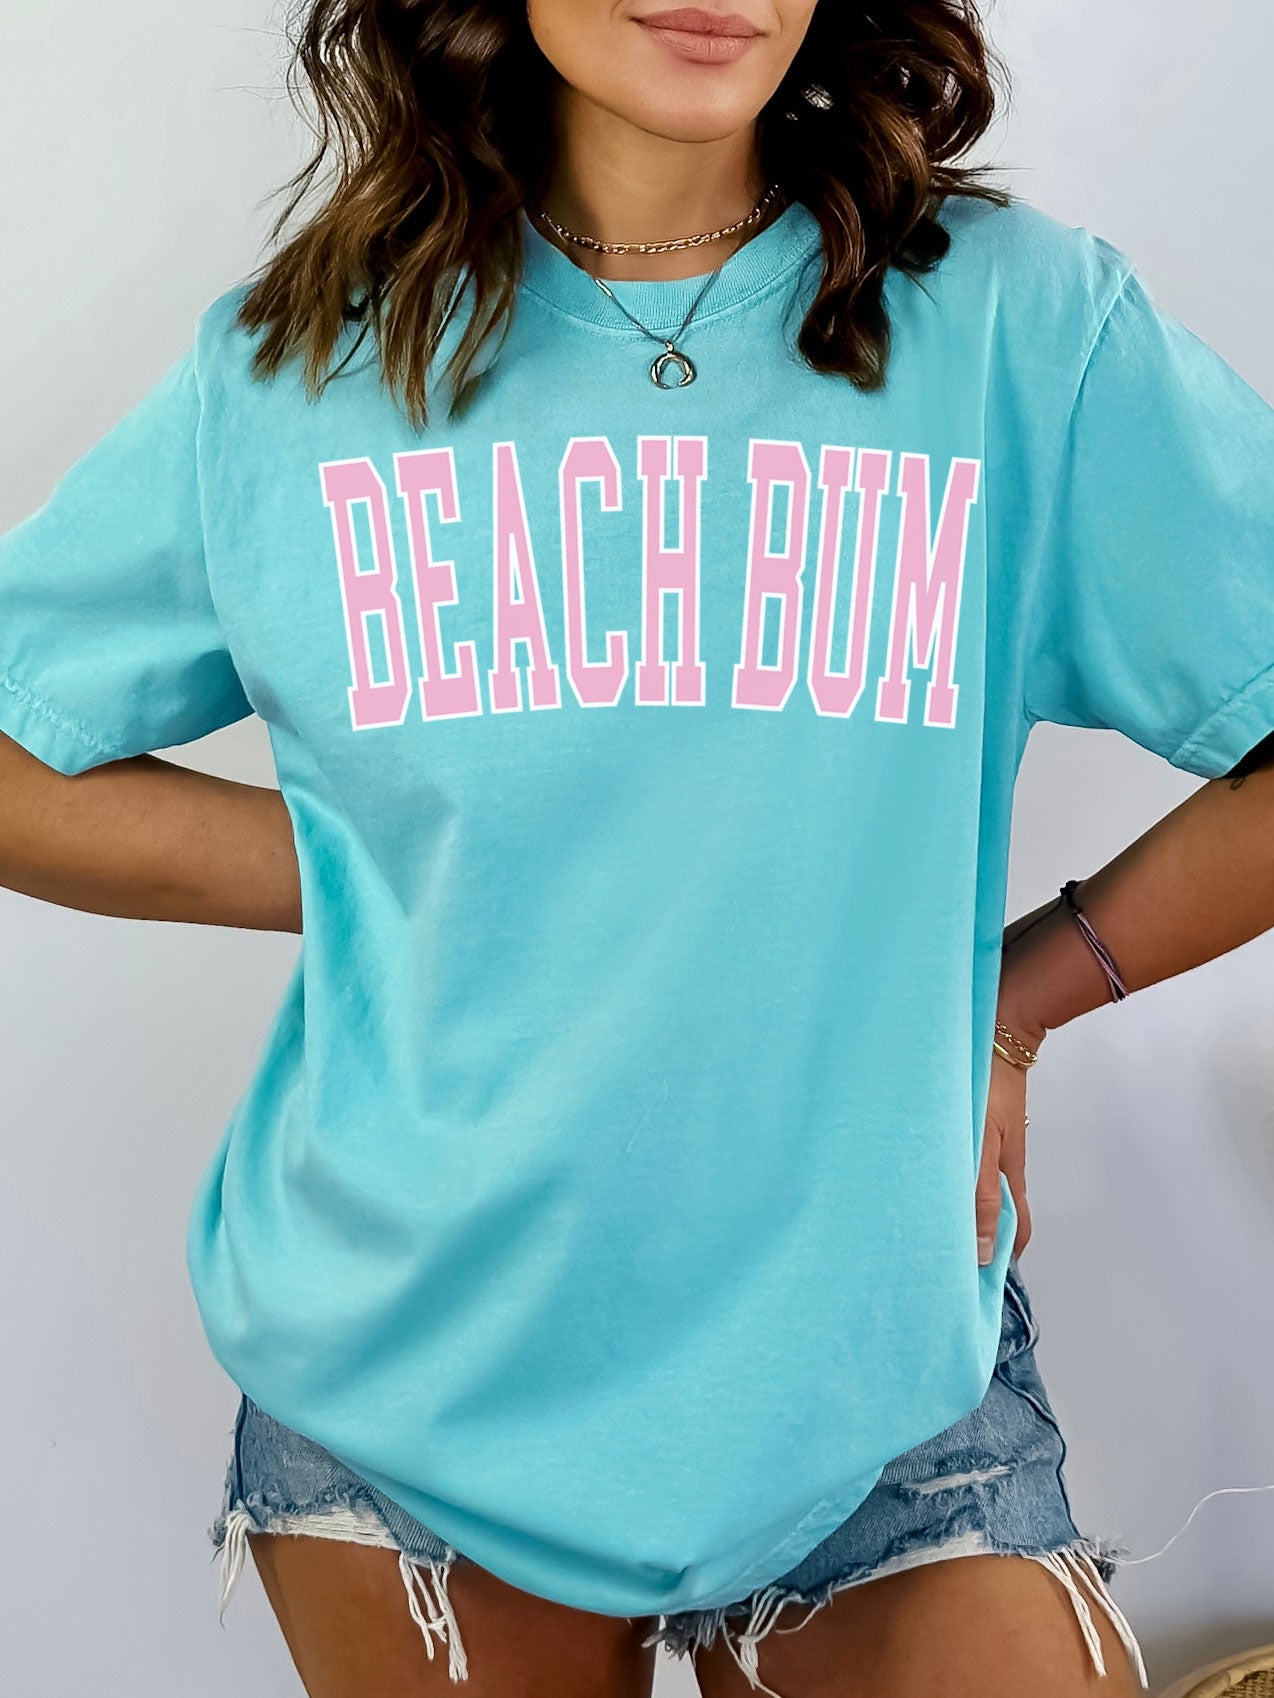 Beach Bum Comfort Colors® Tshirt - Pink Ink